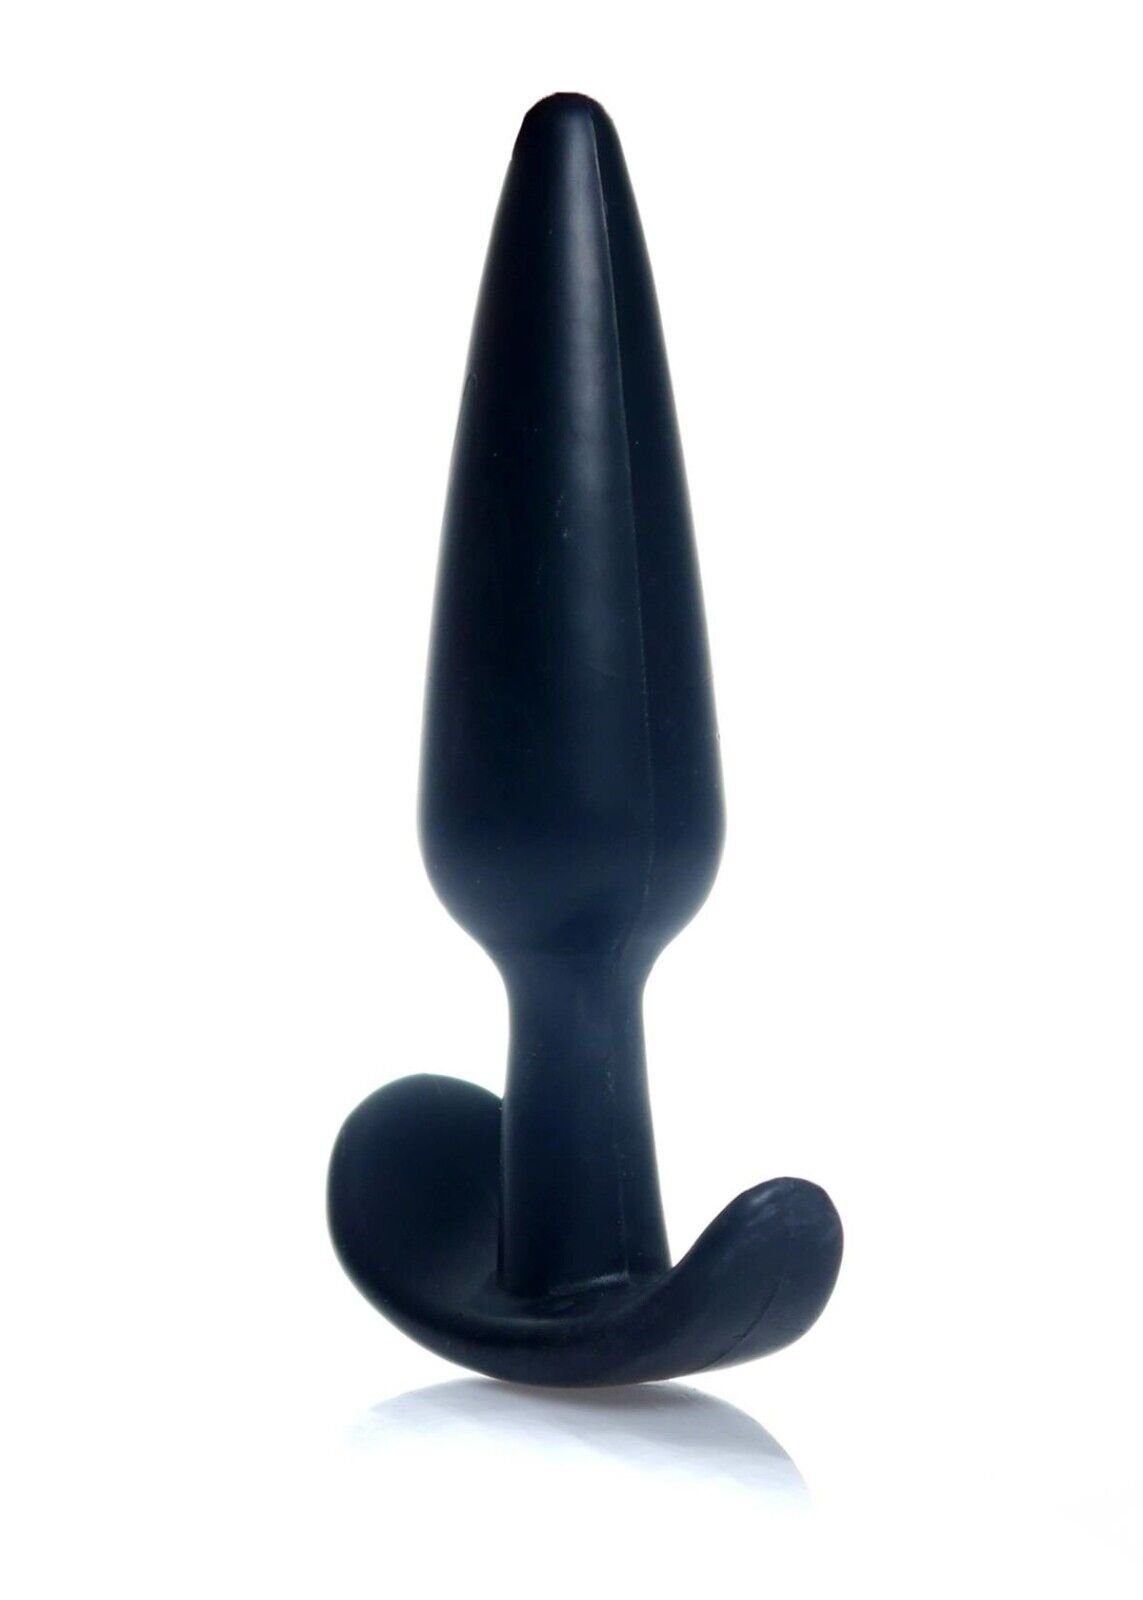 Sexspielzeug T-Plug Analplug Lang Weich Anal Plug 12cm Stöpsel denu-shop Anal